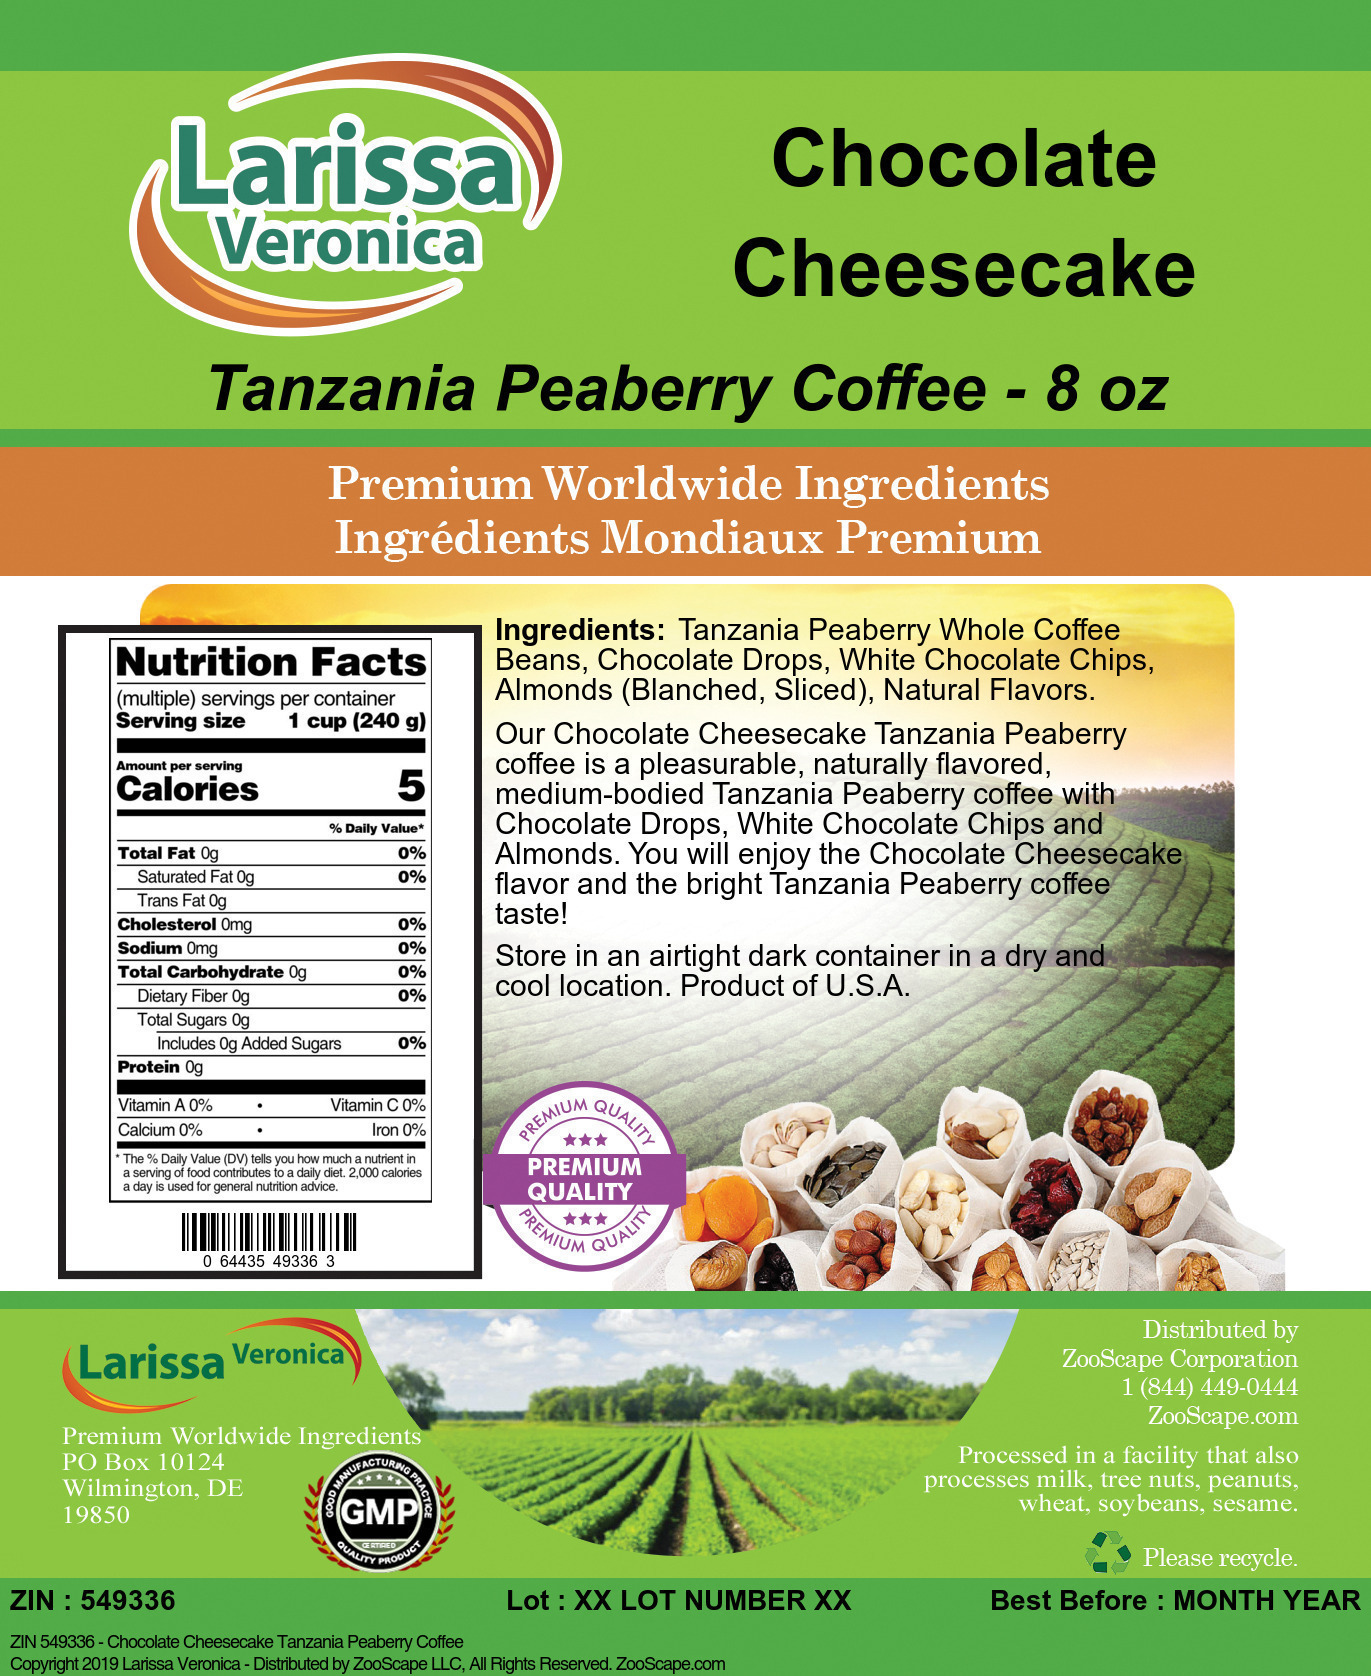 Chocolate Cheesecake Tanzania Peaberry Coffee - Label